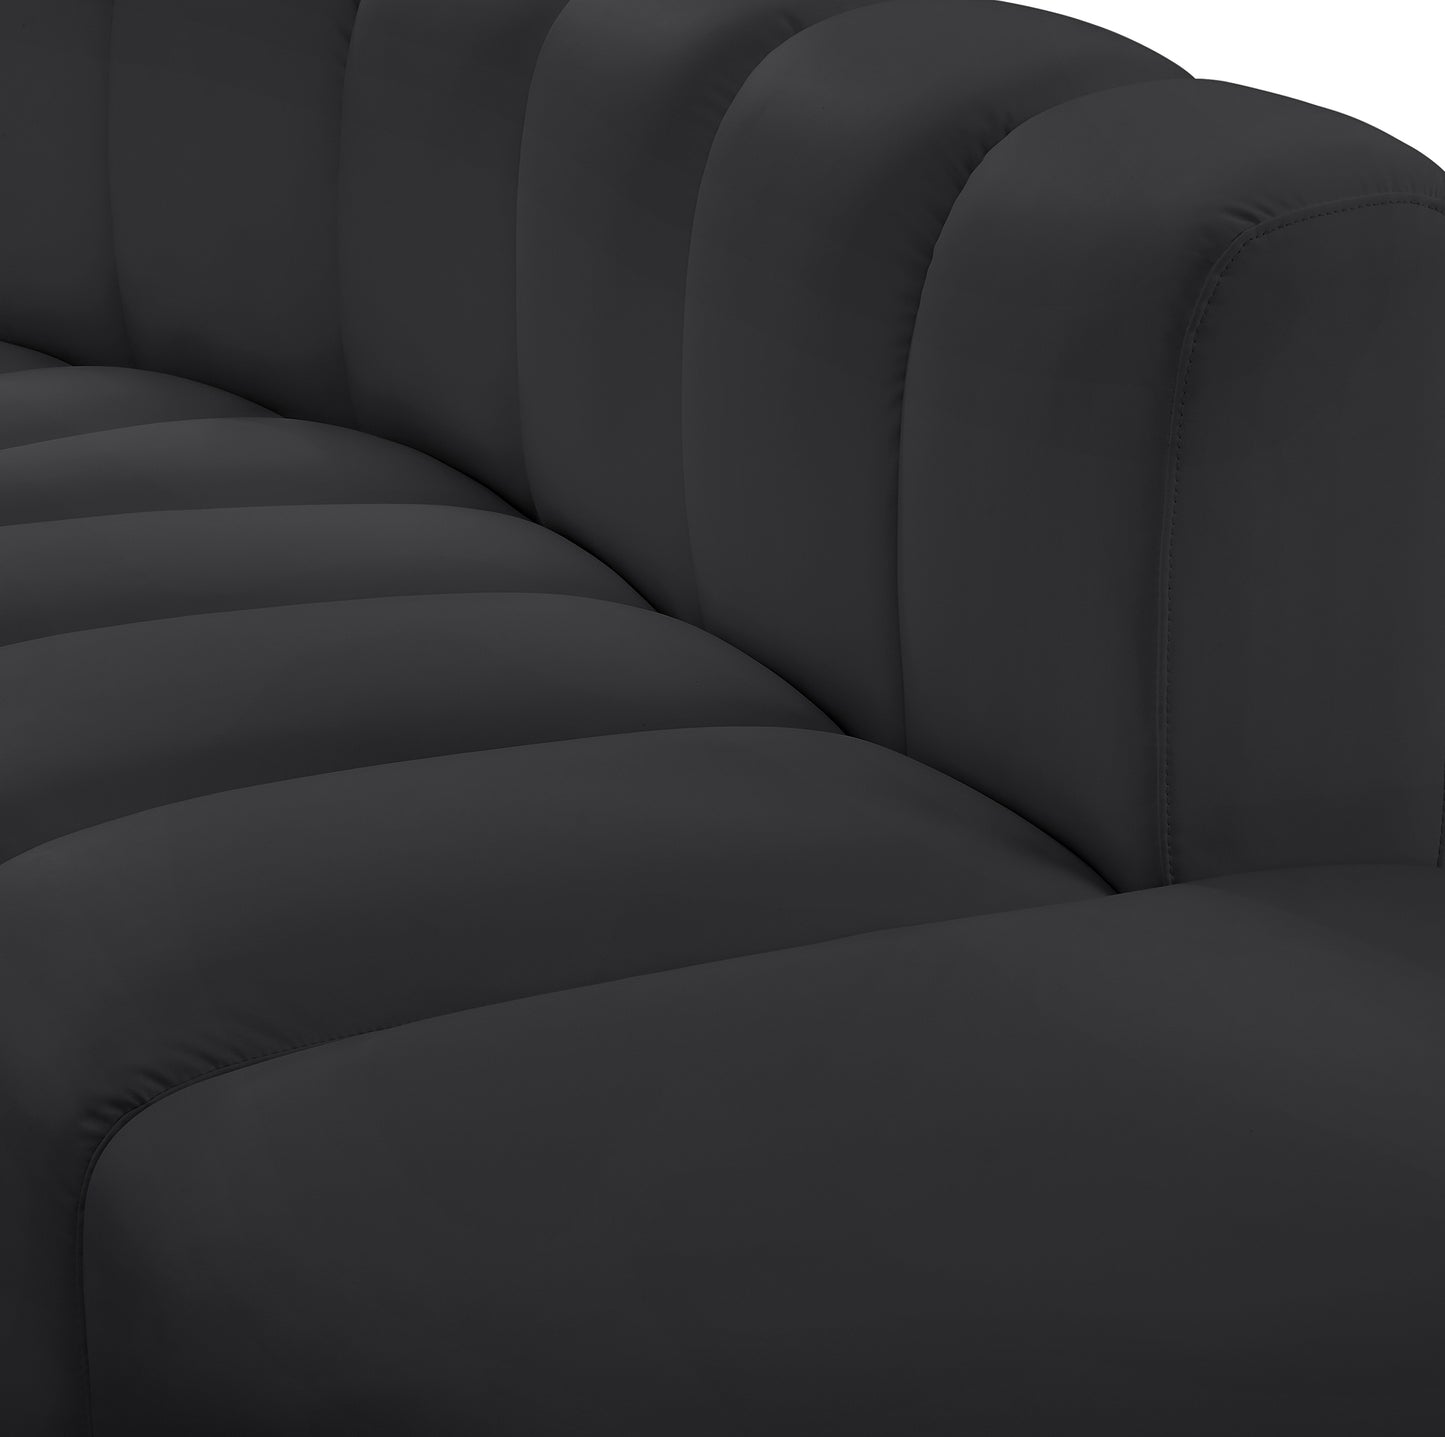 zara black faux leather modular sofa s2a